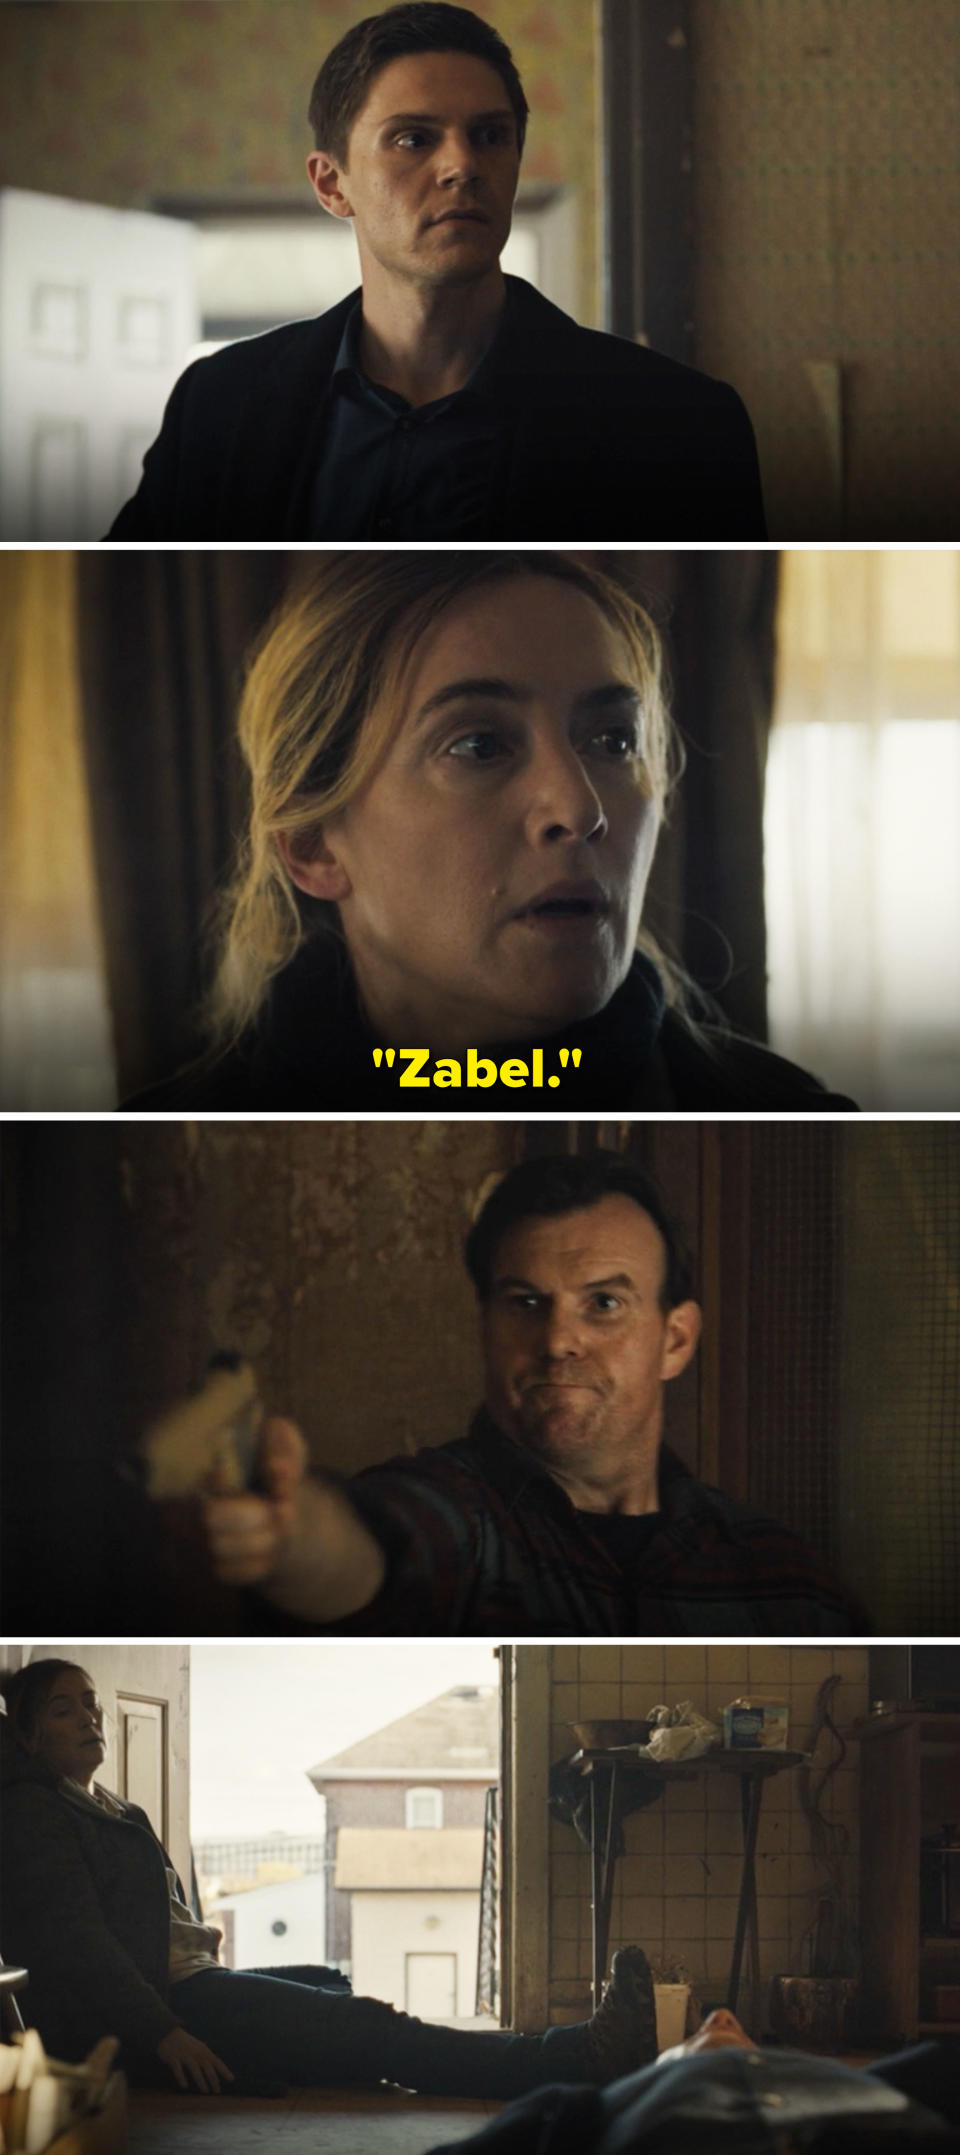 Mare saying "Zabel" before he's shot